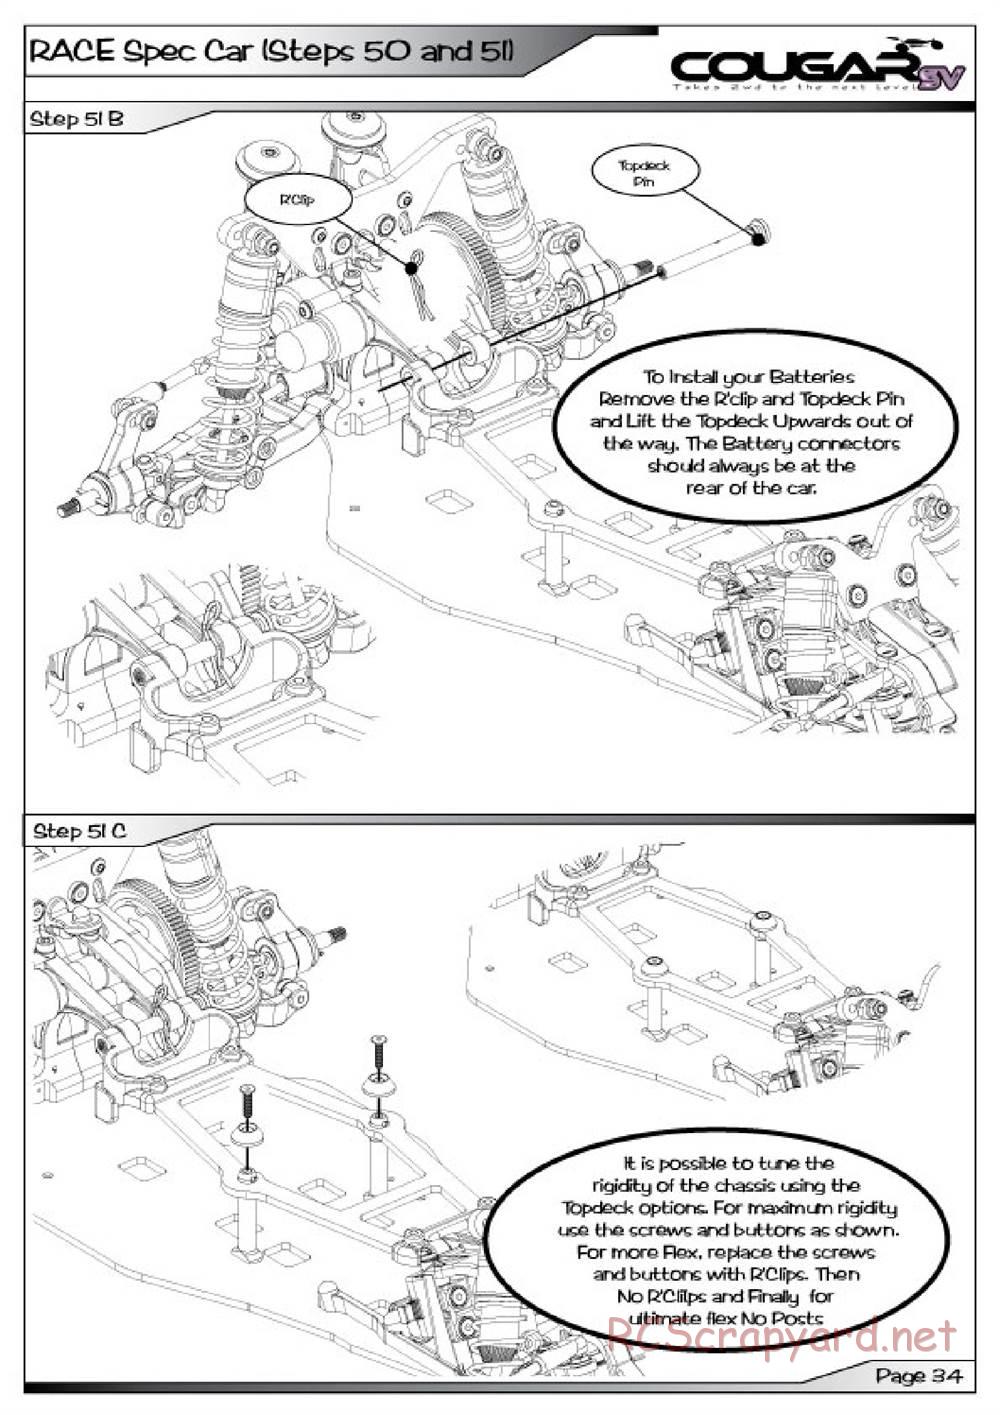 Schumacher - Cougar SV - Manual - Page 35